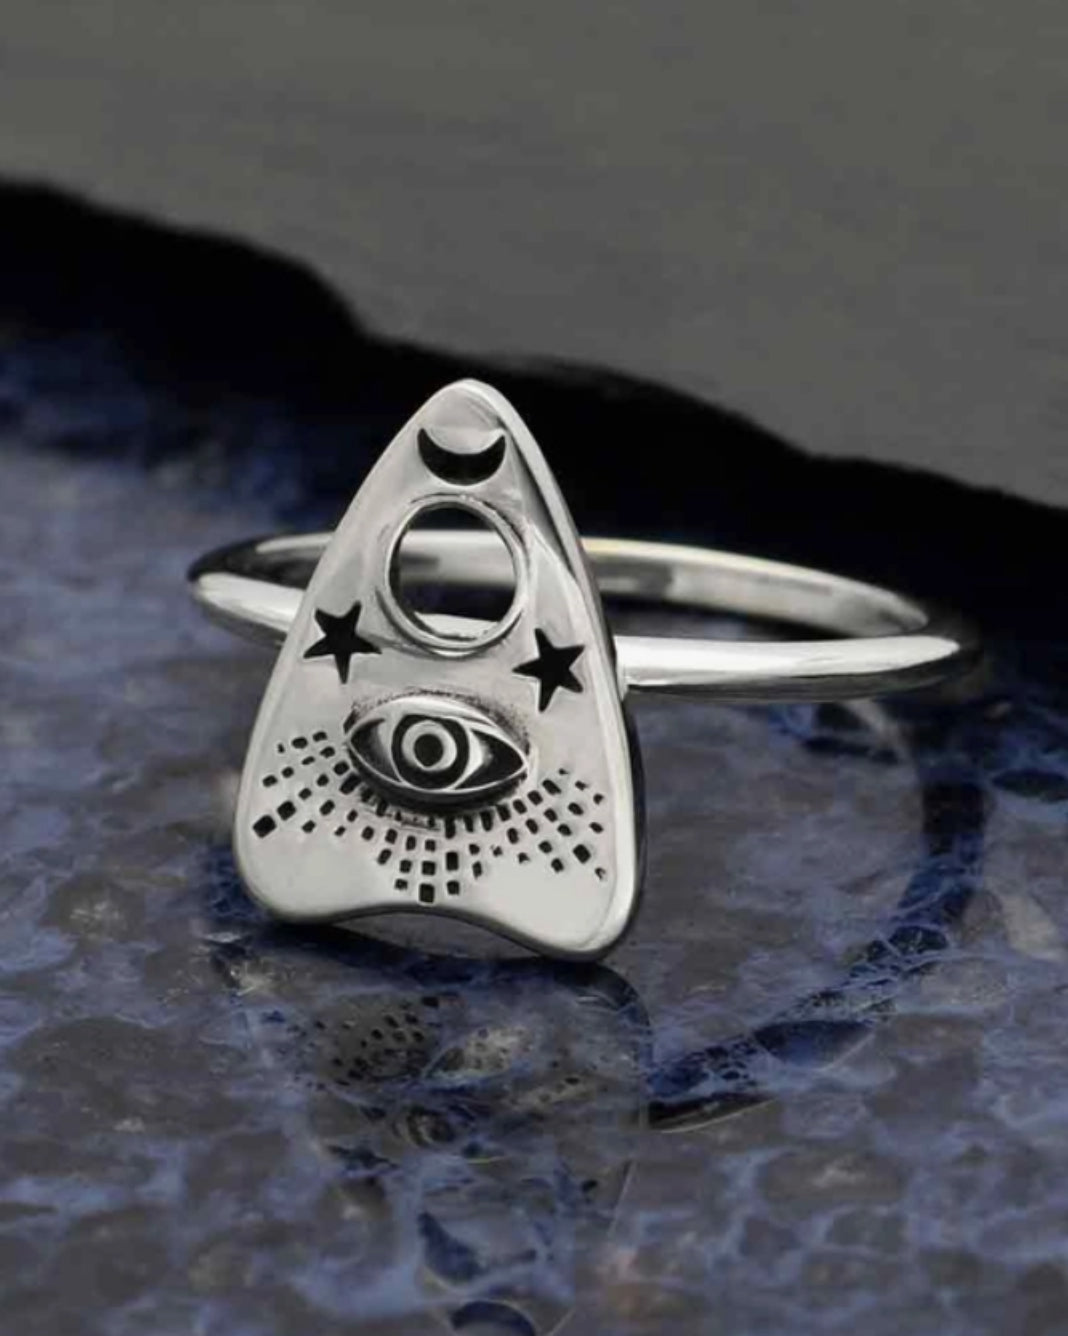 Ouija Planchette Ring